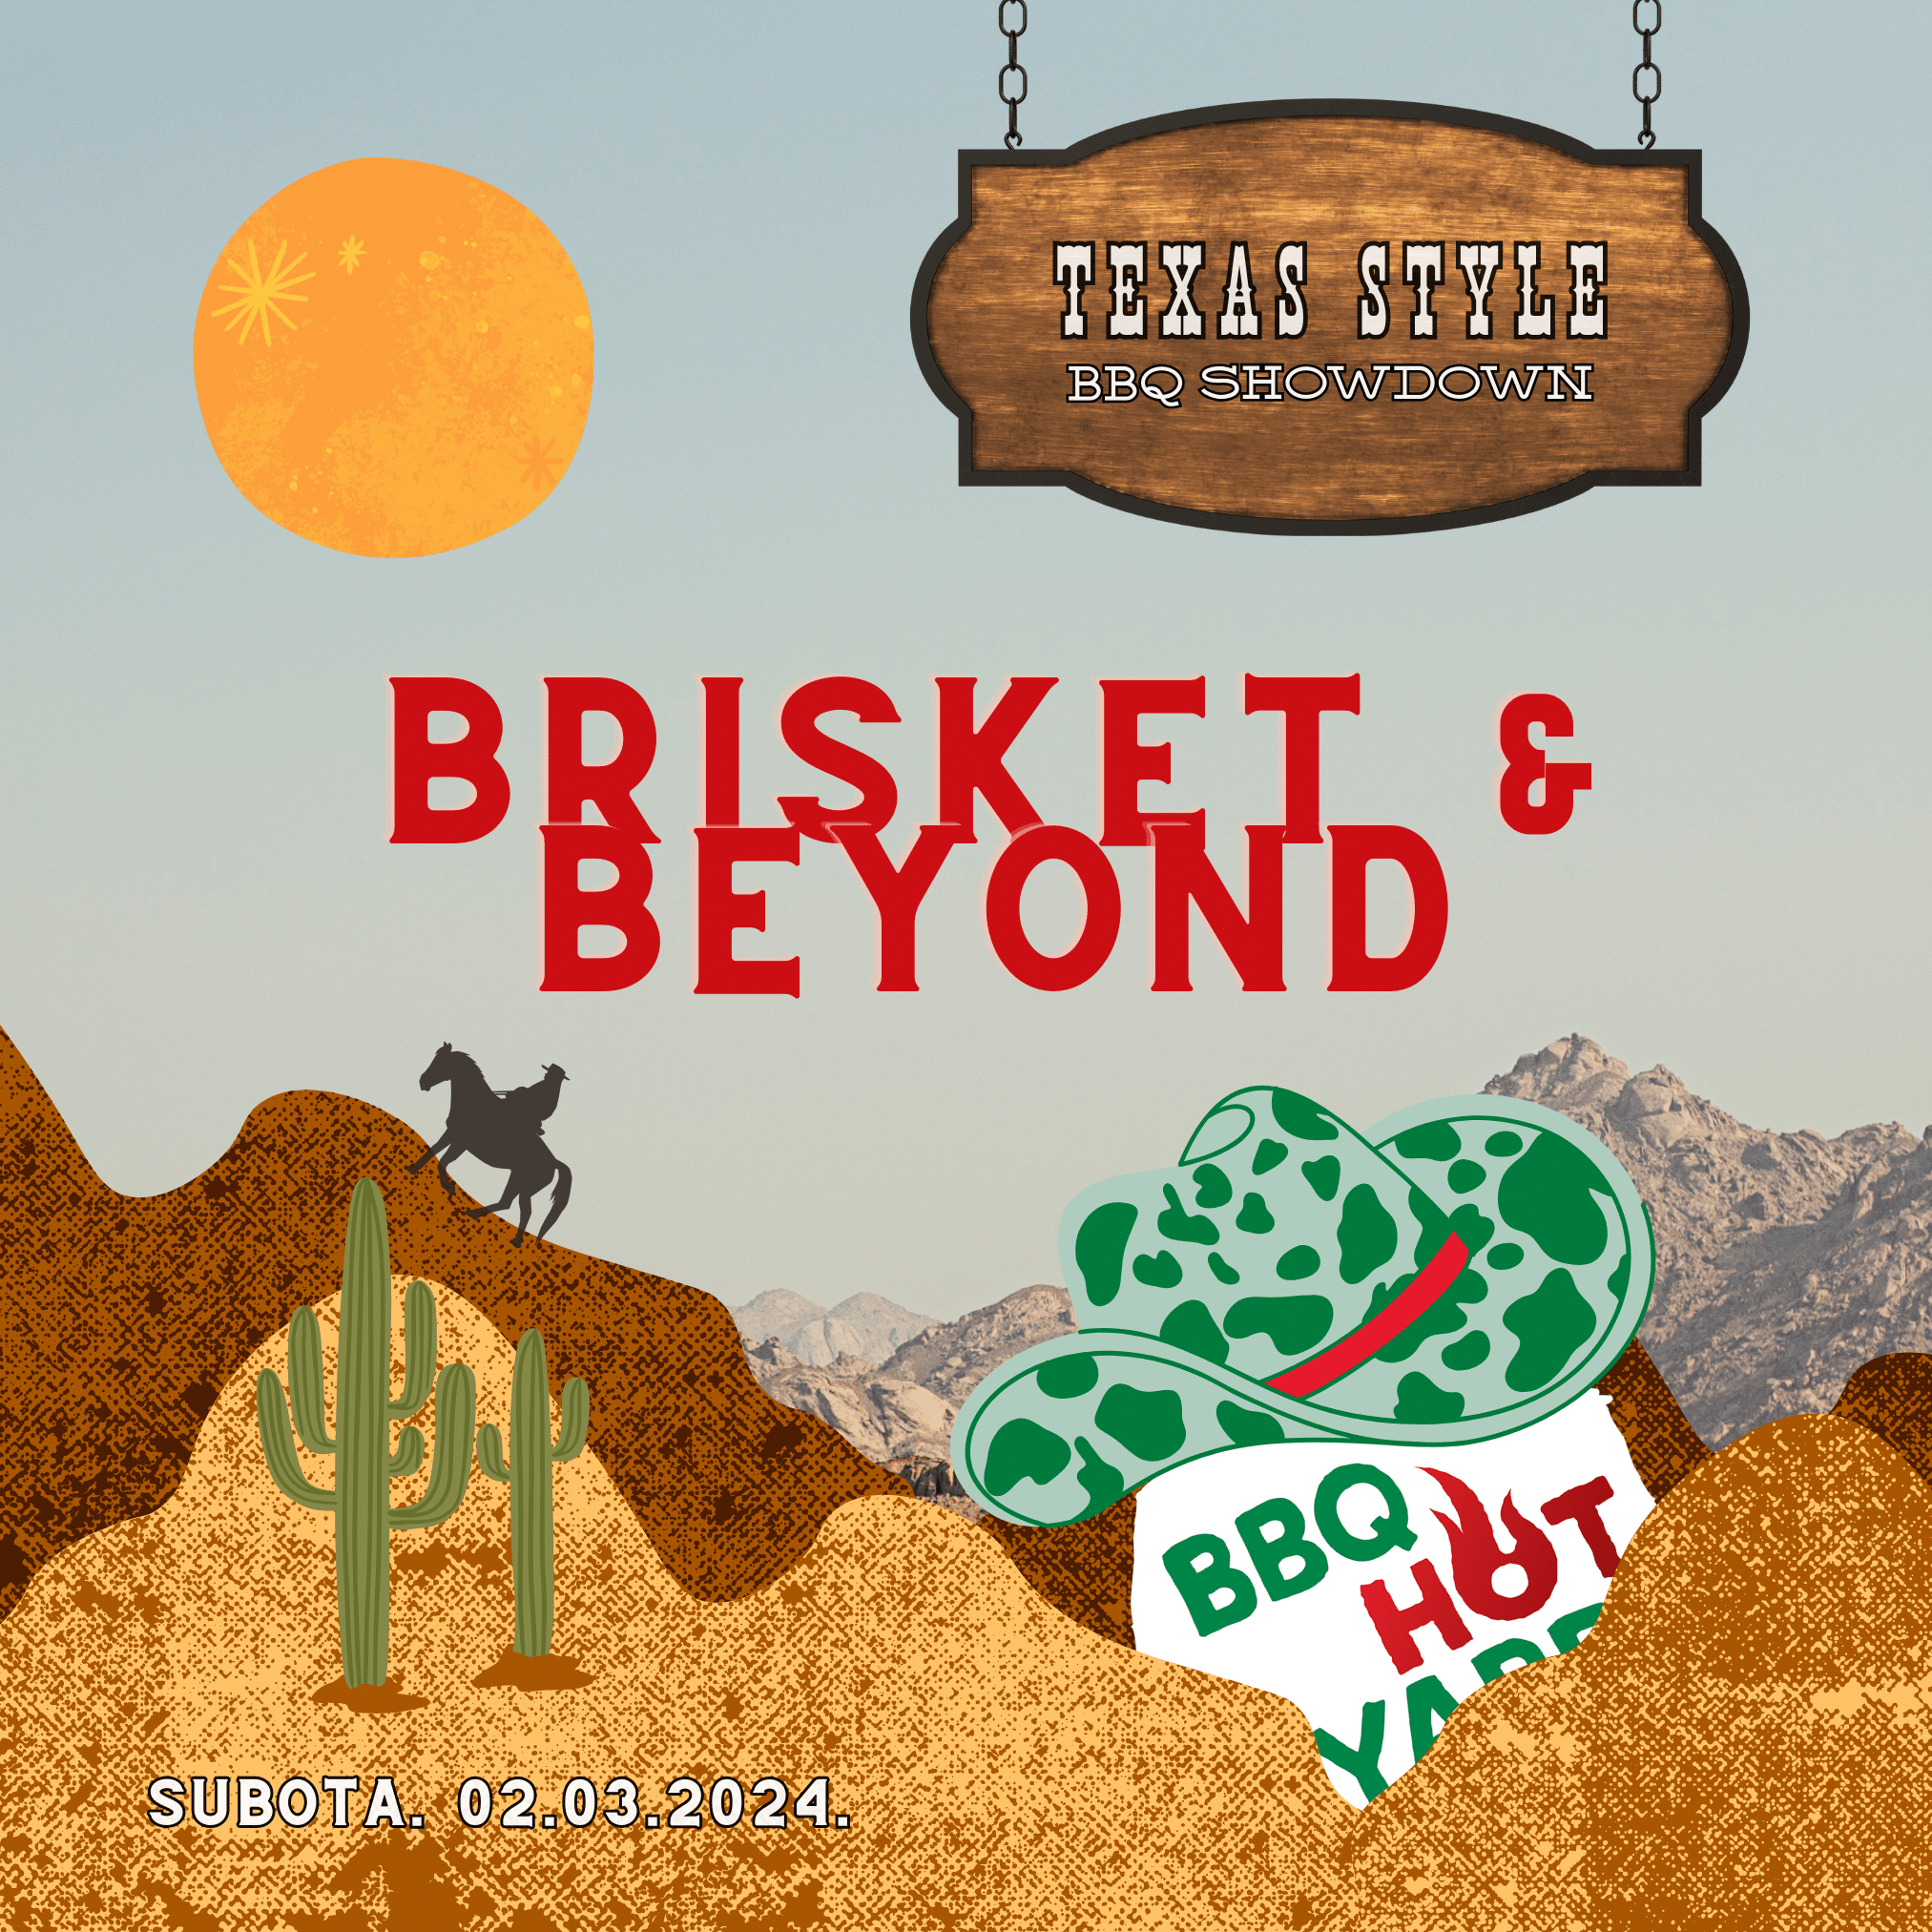 BBQ Radionica - Texas style BBQ Showdown: Brisket and Beyond -bbqhotyard.com